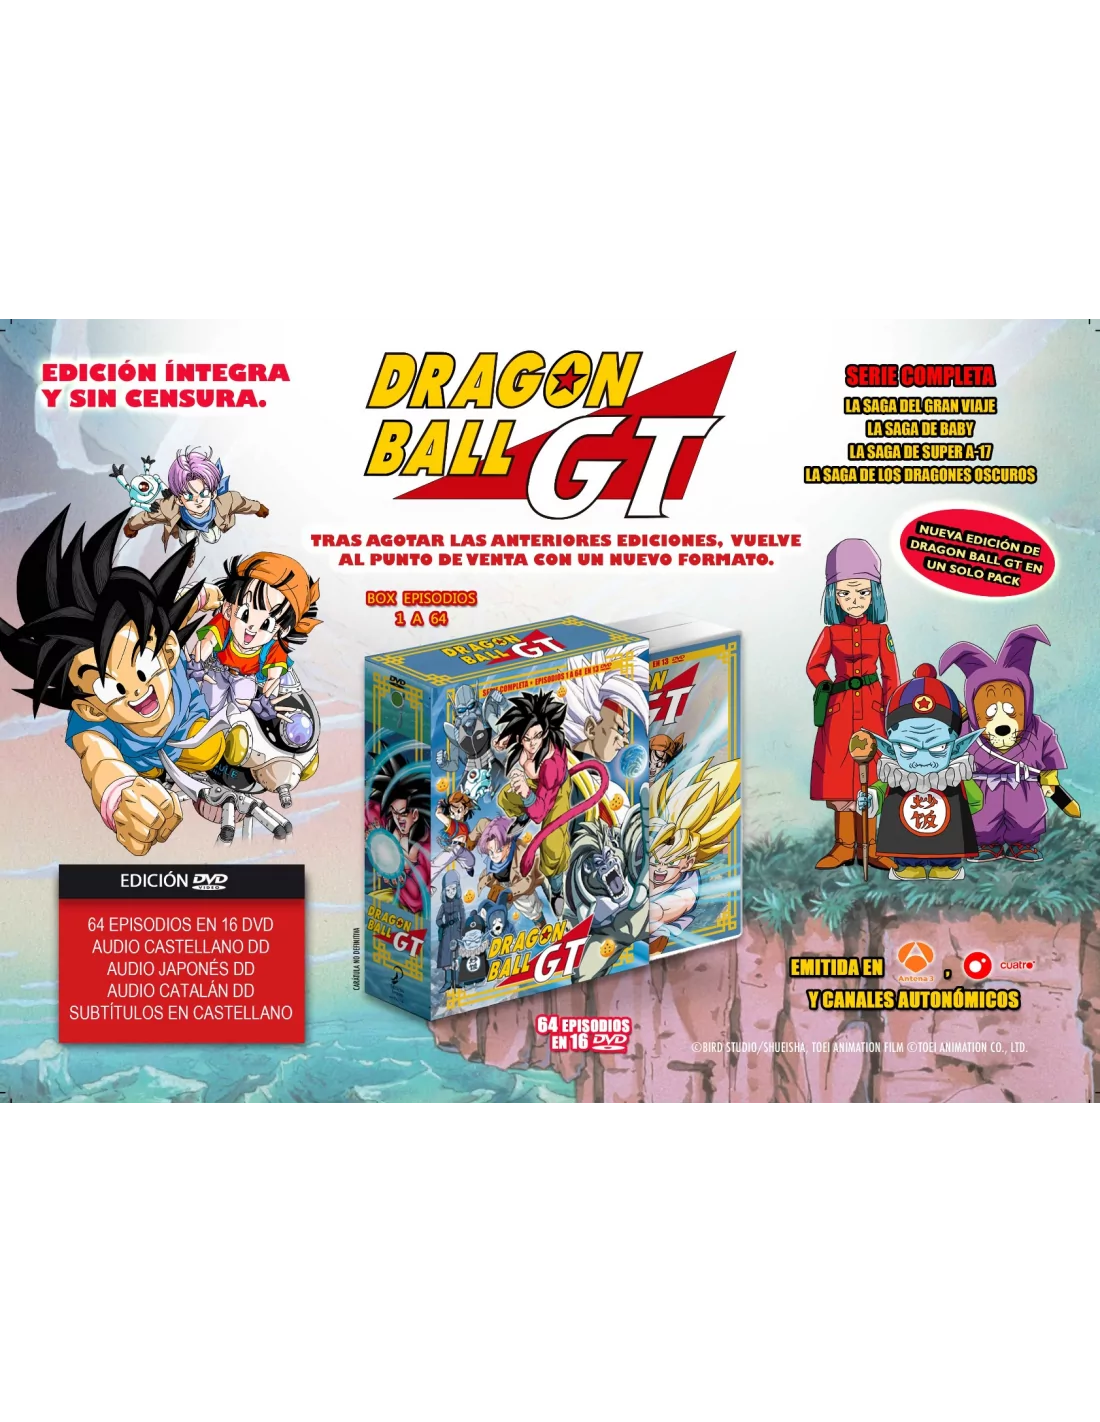 NEW DRAGON BALL GT Vol 1 DVD Español Latino SPANISH 35 EPISODIOS